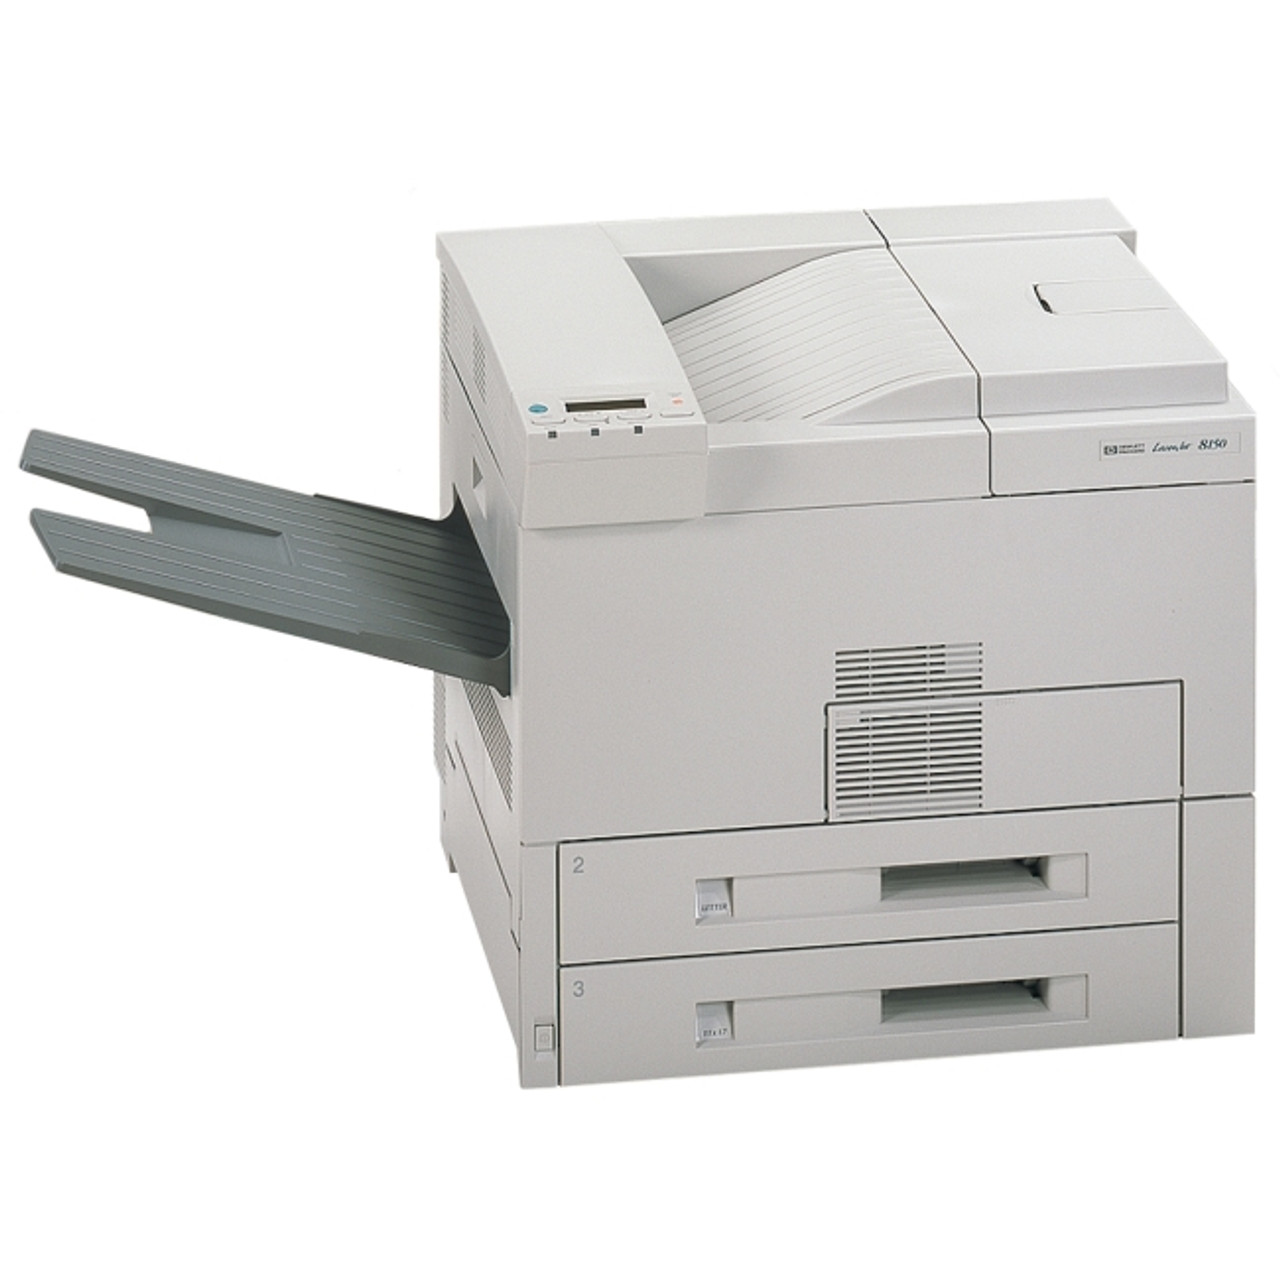 Color LaserJet 4550 Printer series